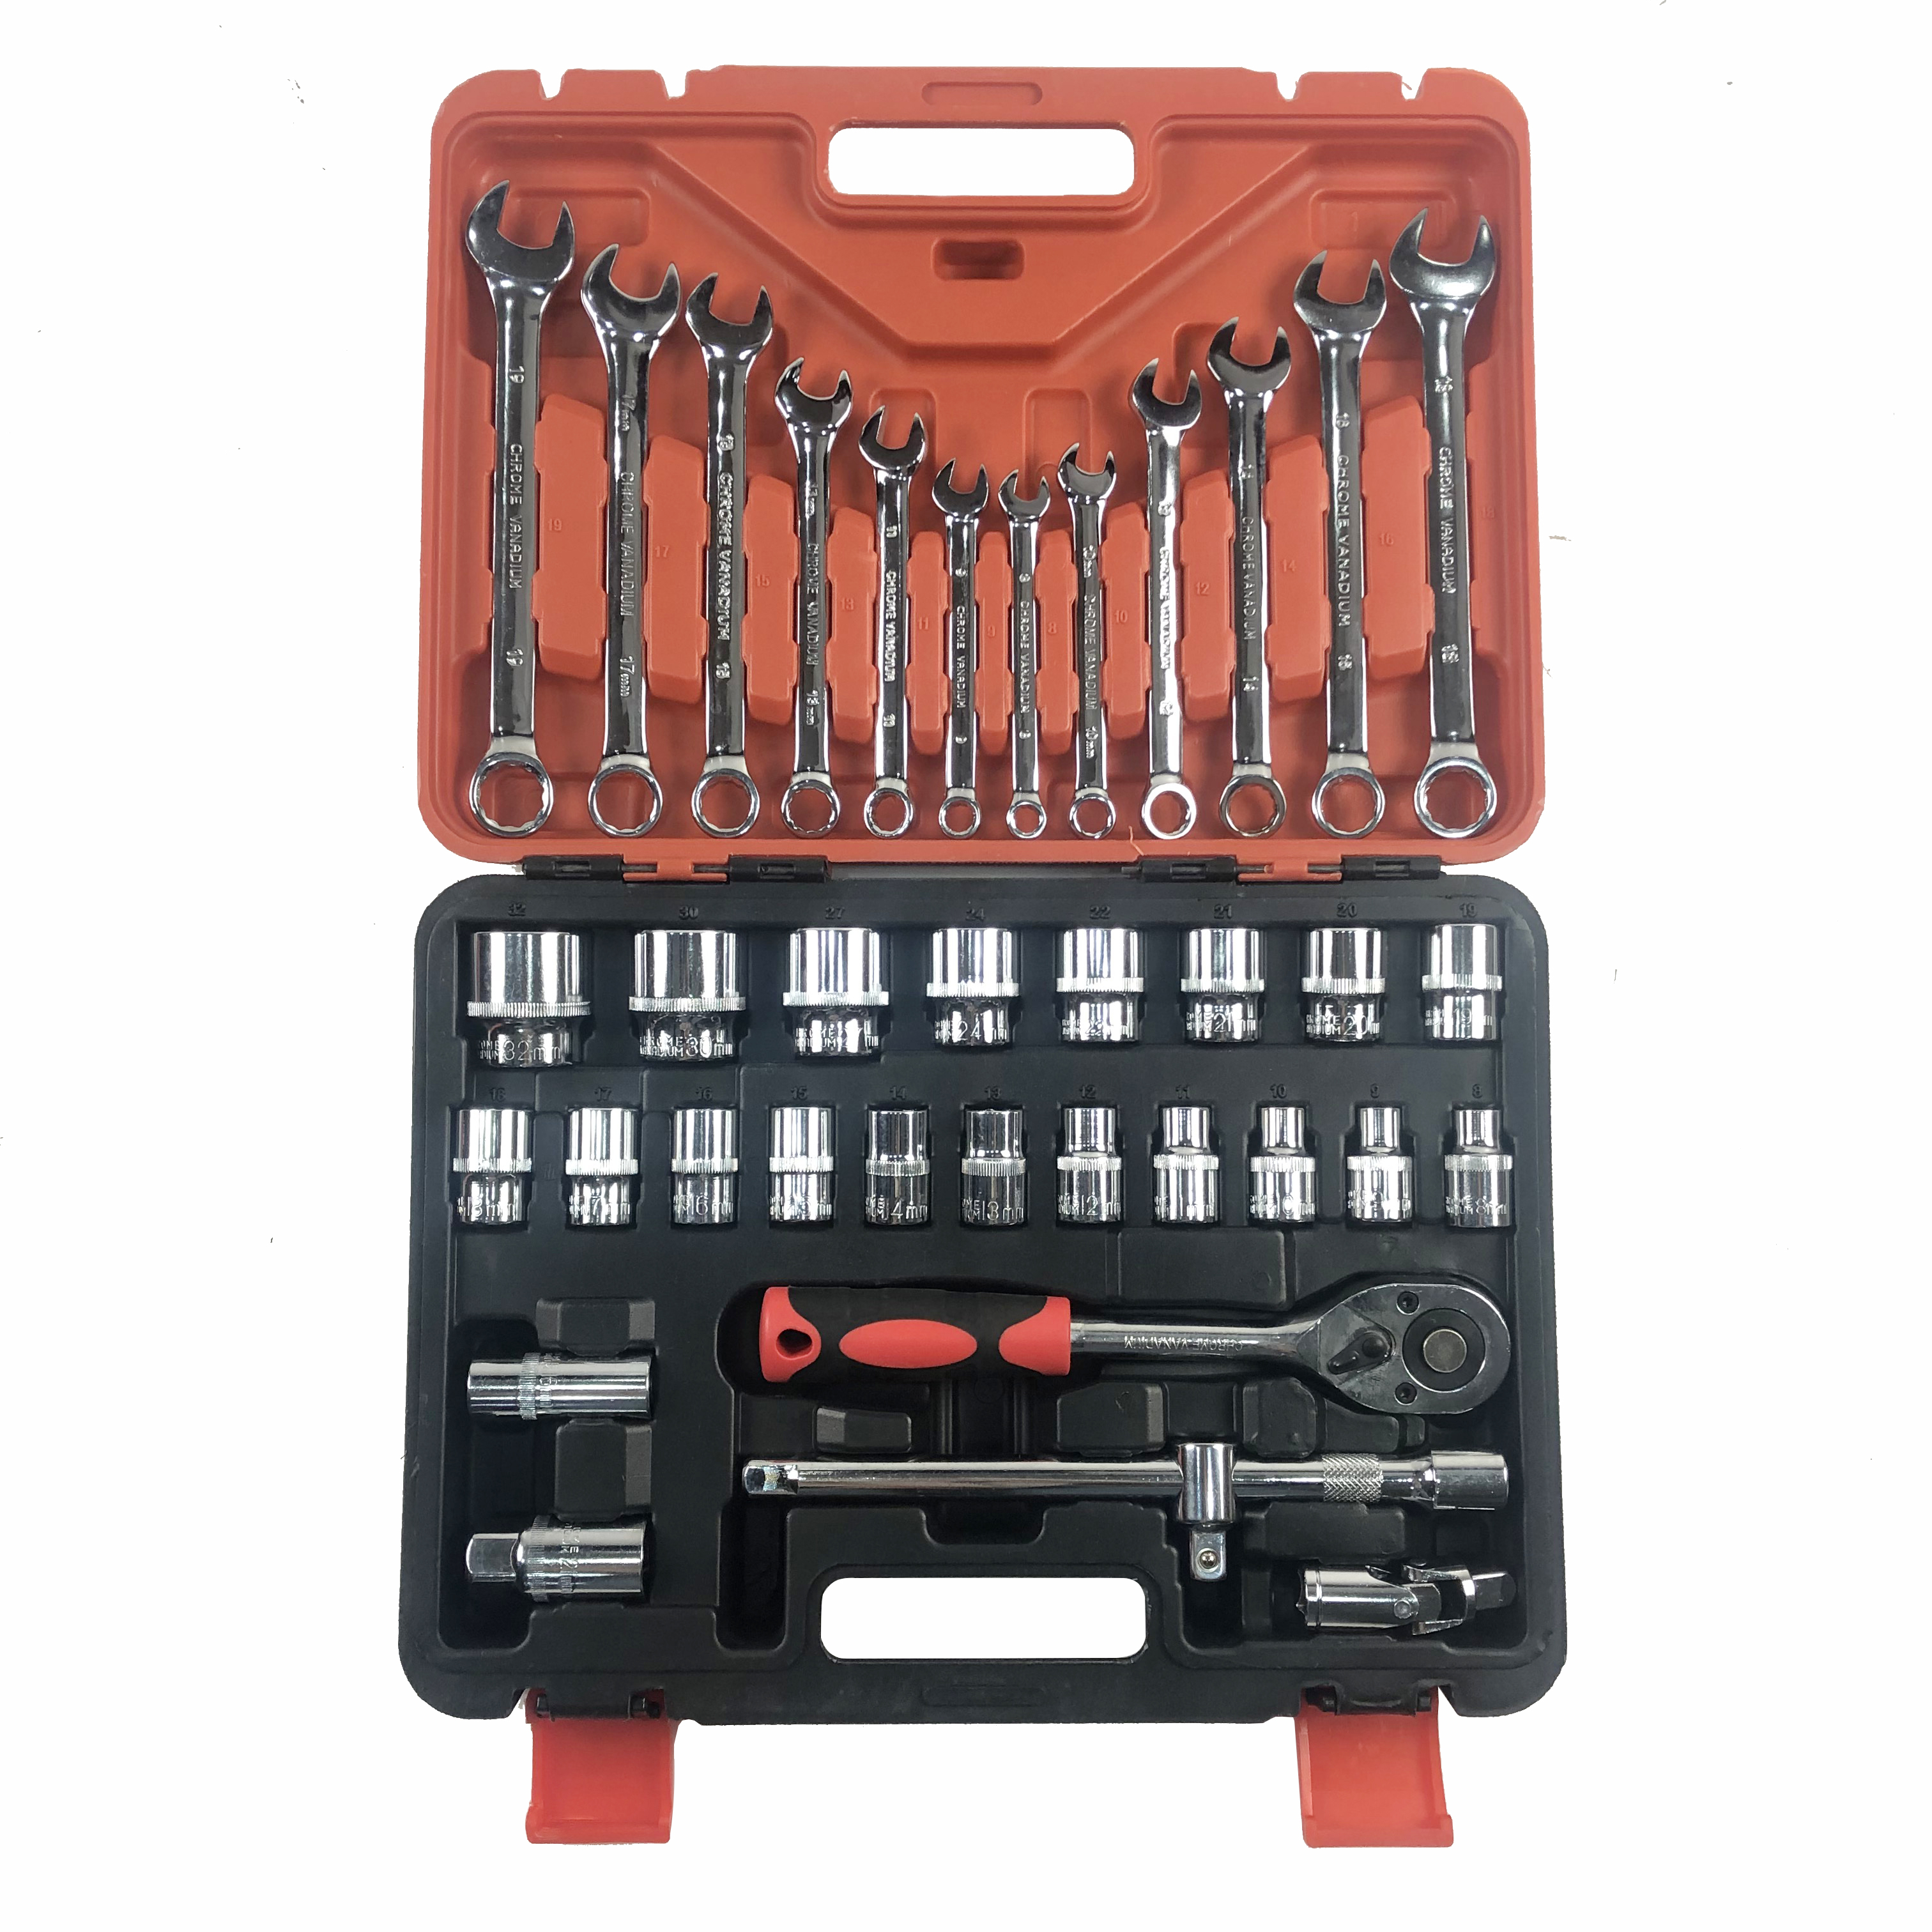 37in1 1/2'' Ratchet Socket Head Bits Wrench Tool Repair Set Hand Tool Home Service DIY Kit